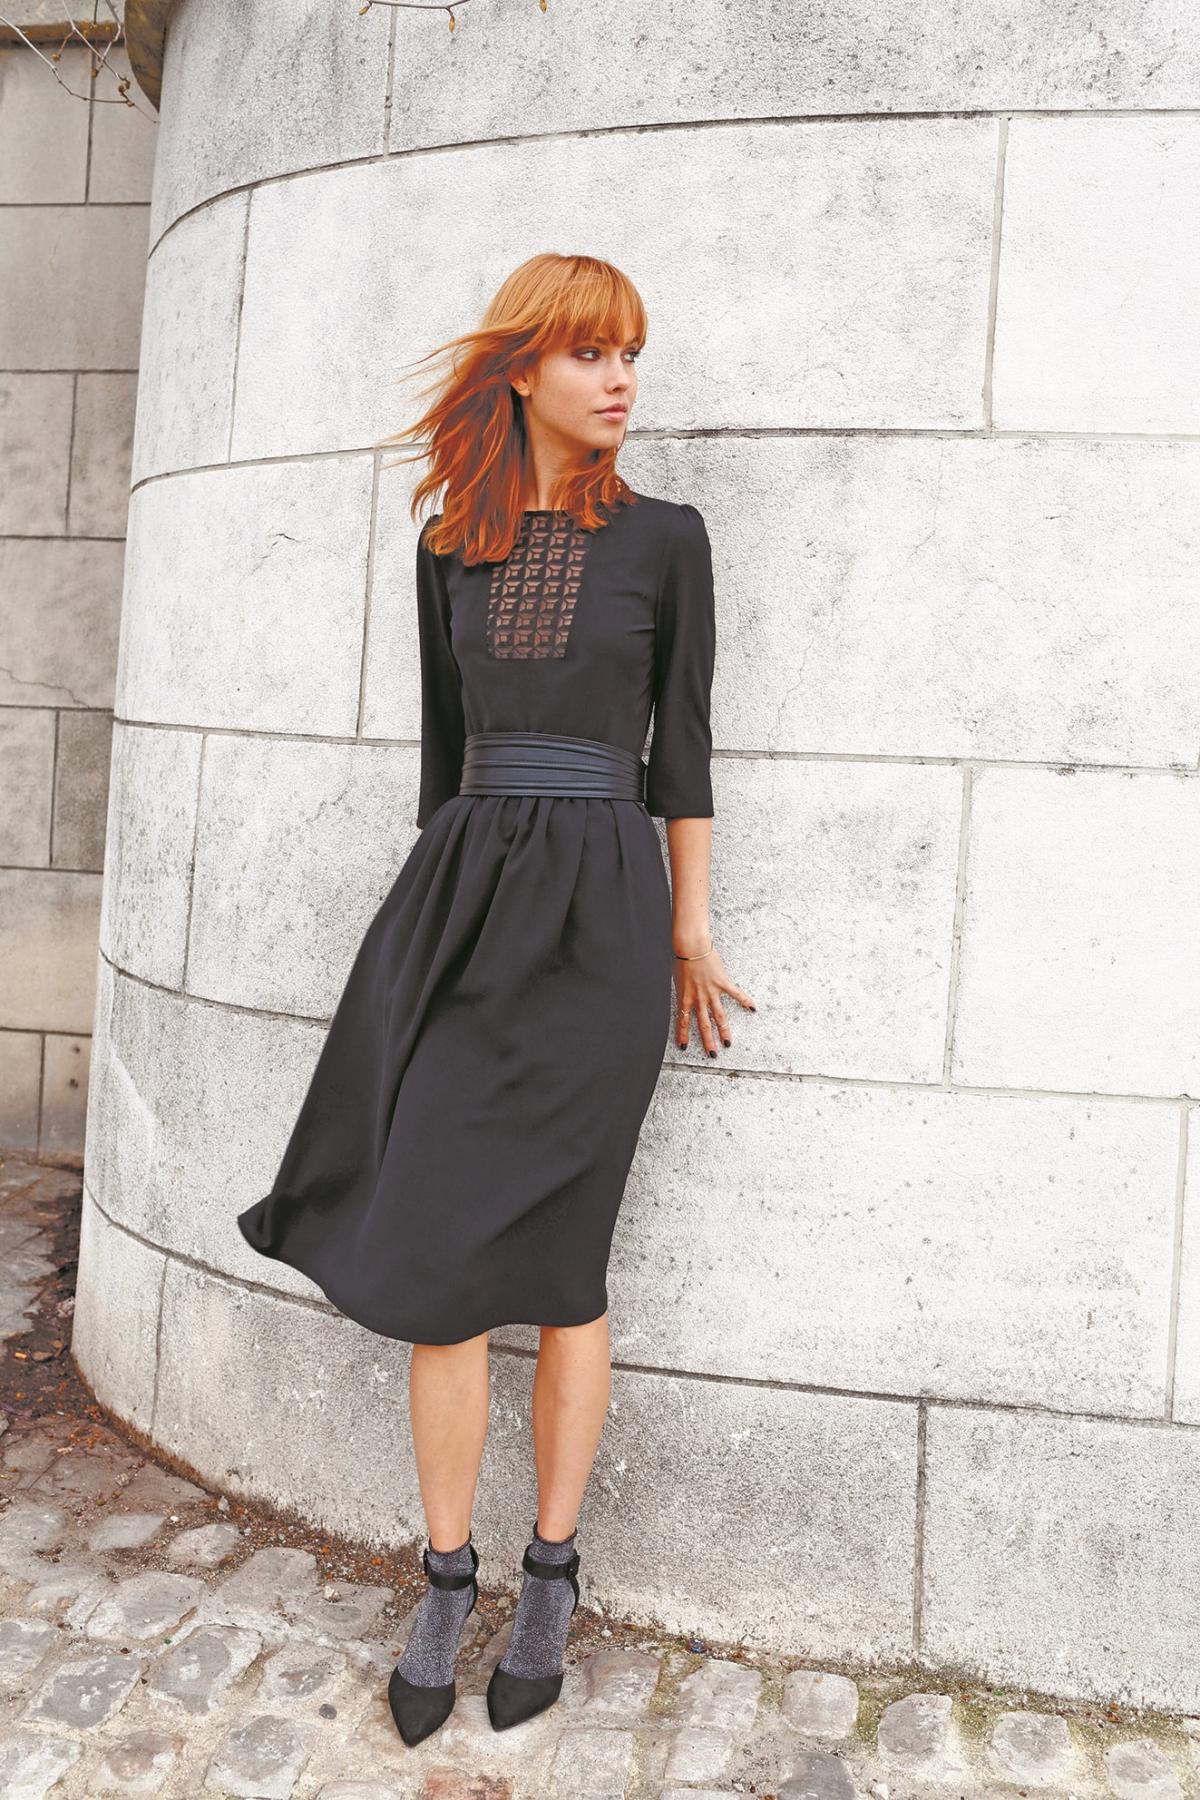 Long sleeve midi dress – La Redoute, Black dress, GBP £59